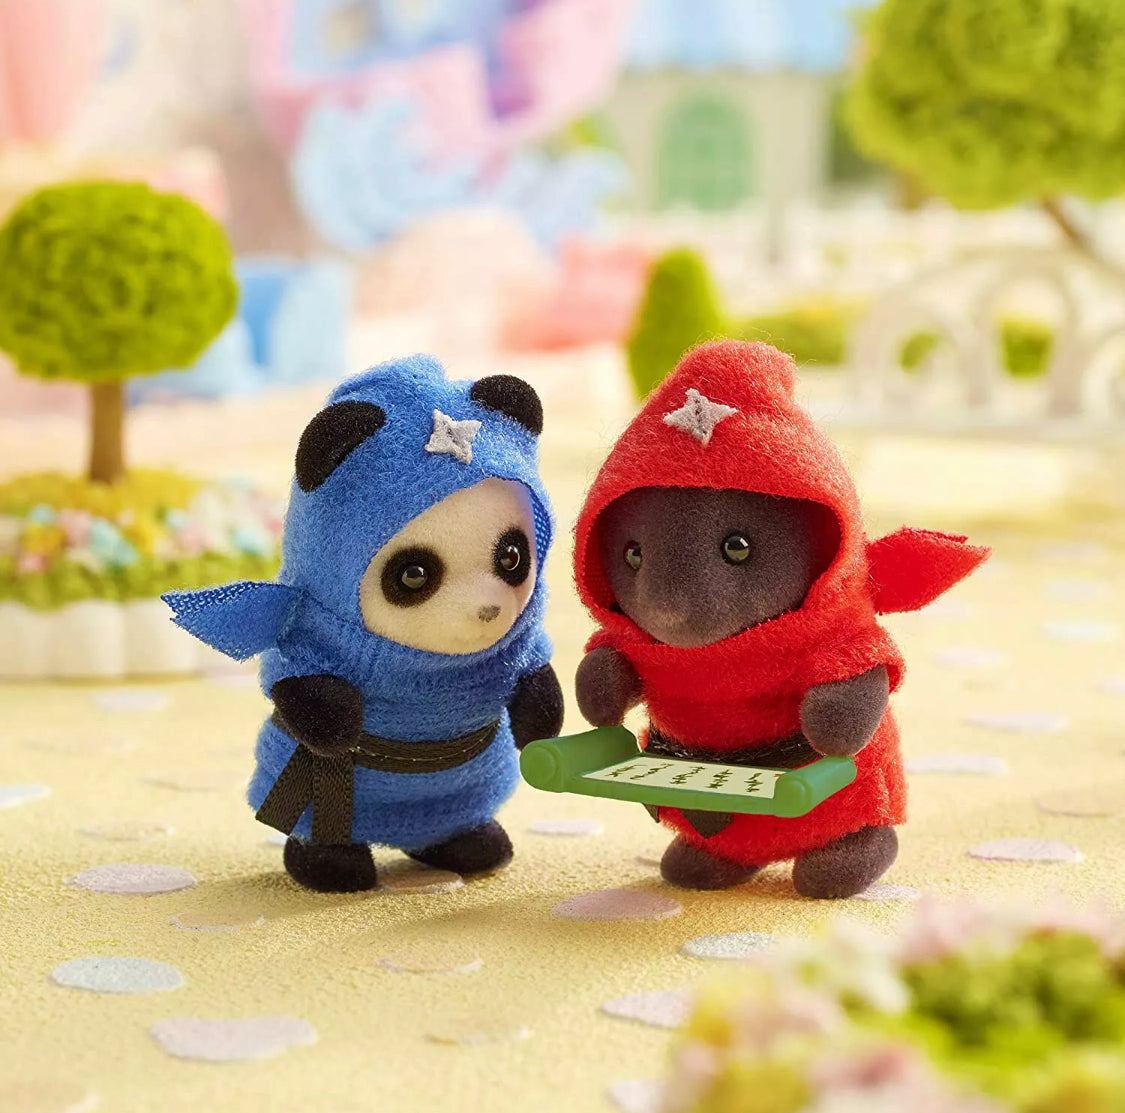 Ninja Panda & Mole - Calico Critters Sylvanian Families 35th Anniversary (NEW) Japan Exclusive